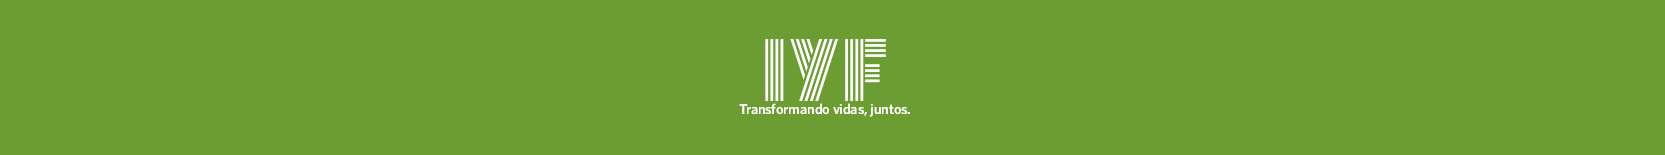 iyf-logo-vert